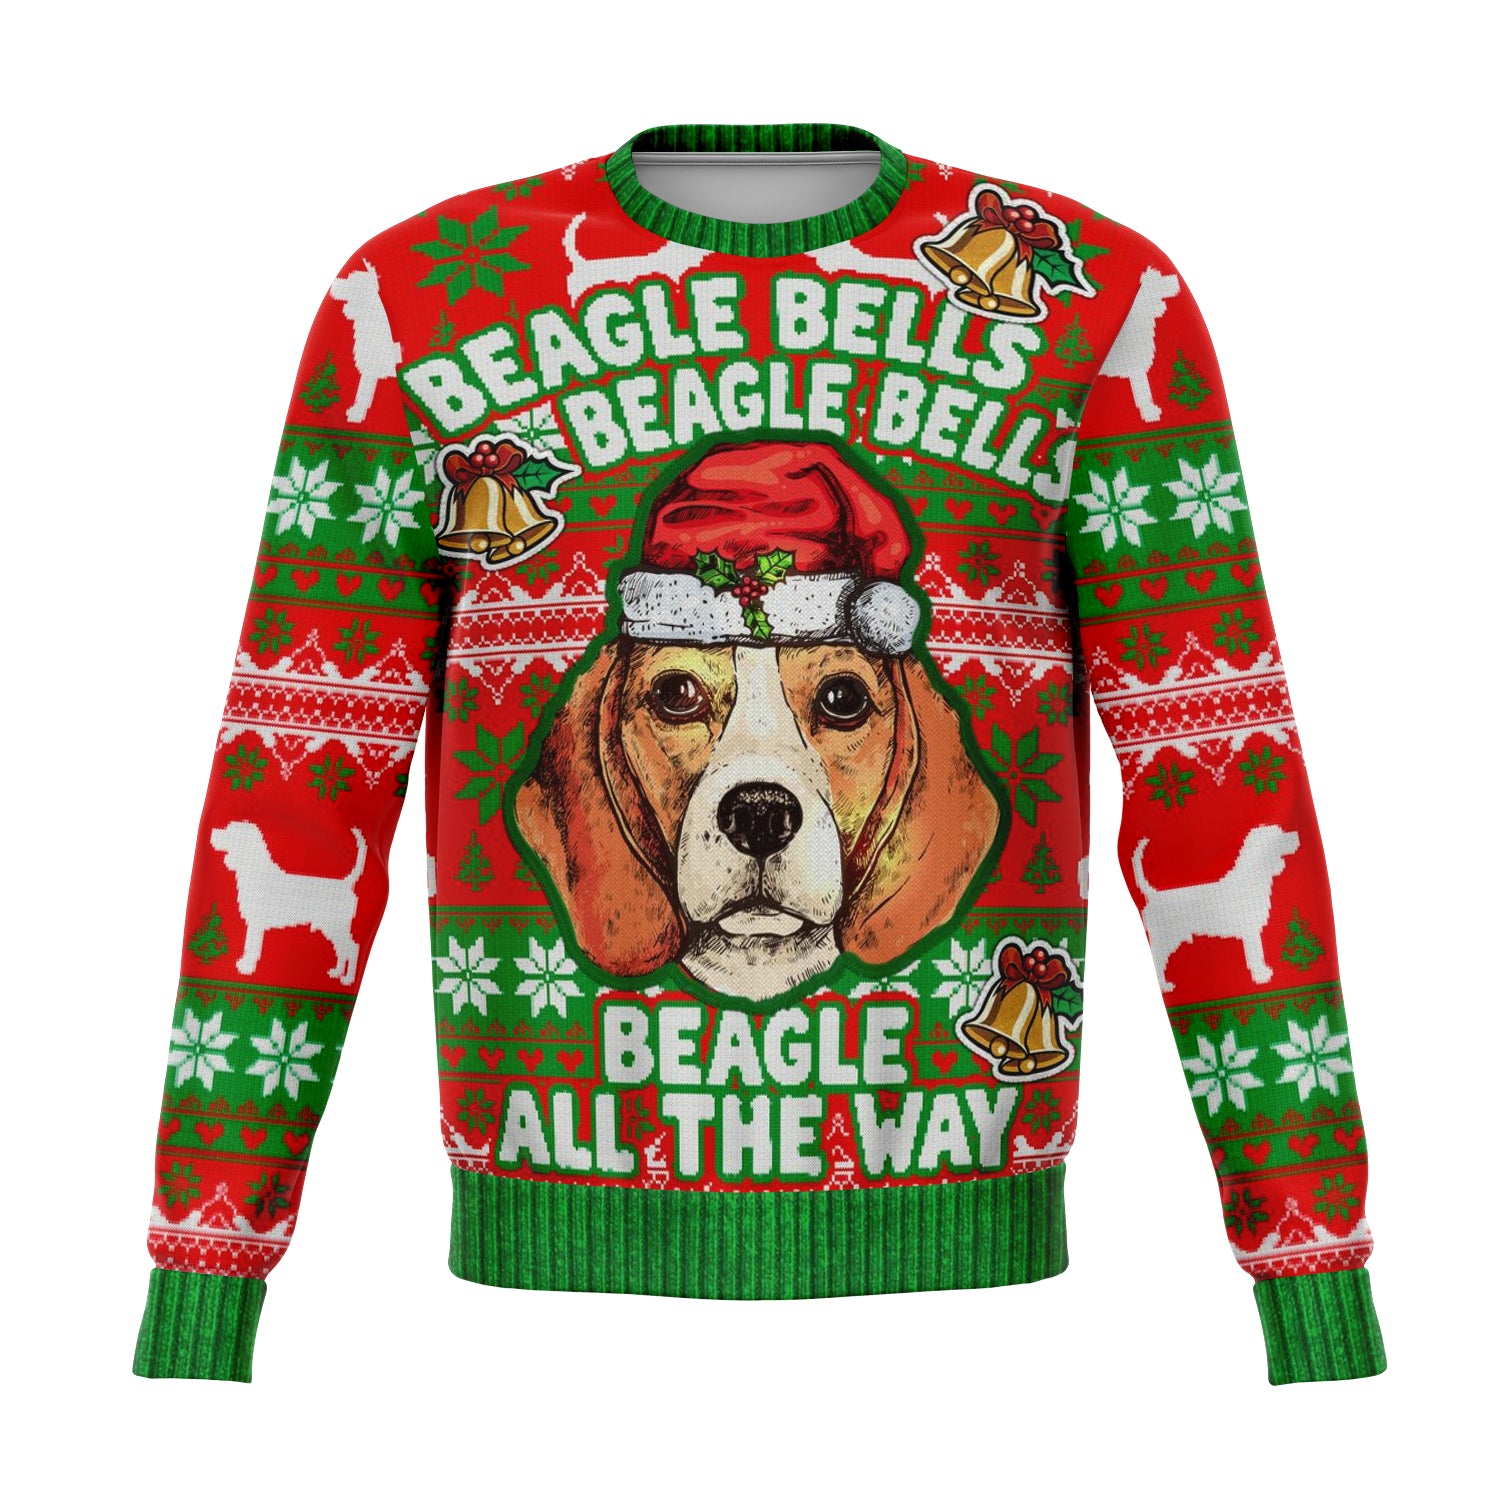 Beagle Bells Sweatshirt